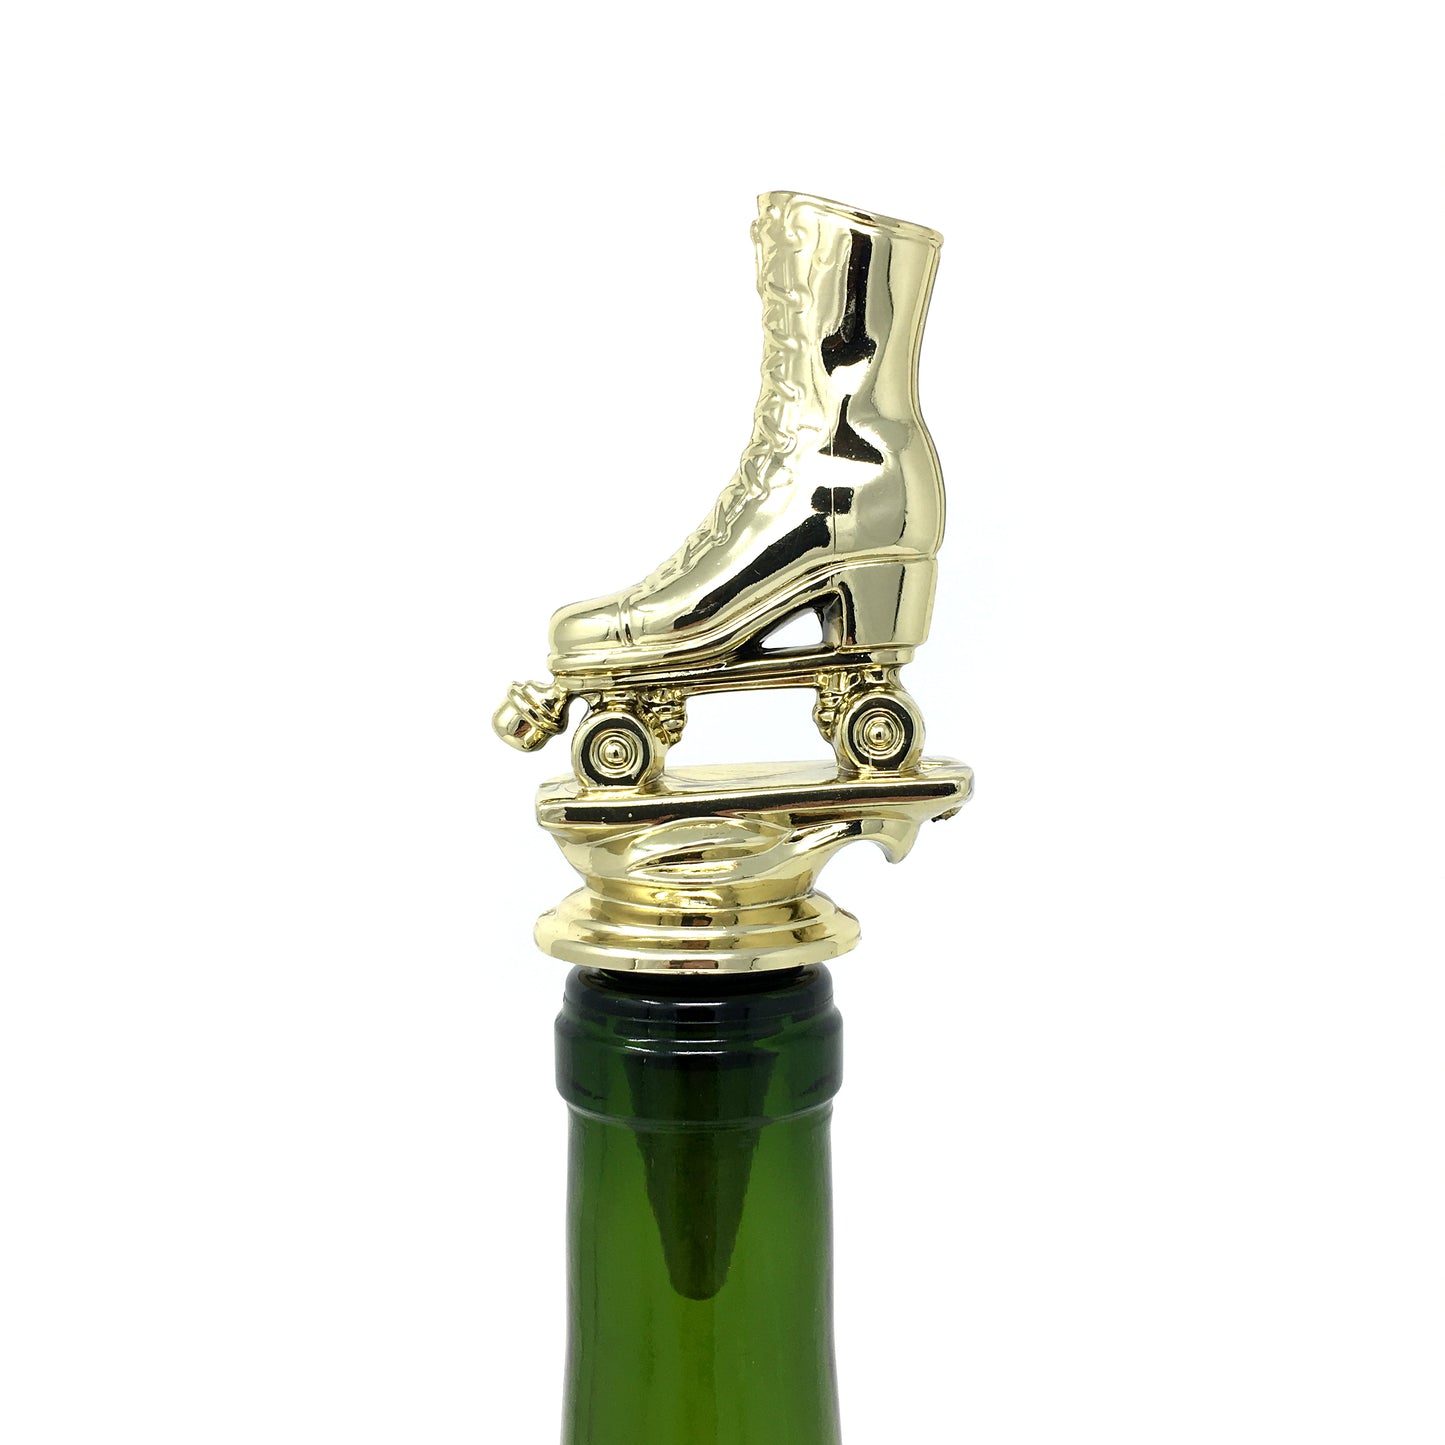 Roller Skate Trophy Wine Bottle Stopper with Stainless Steel Base